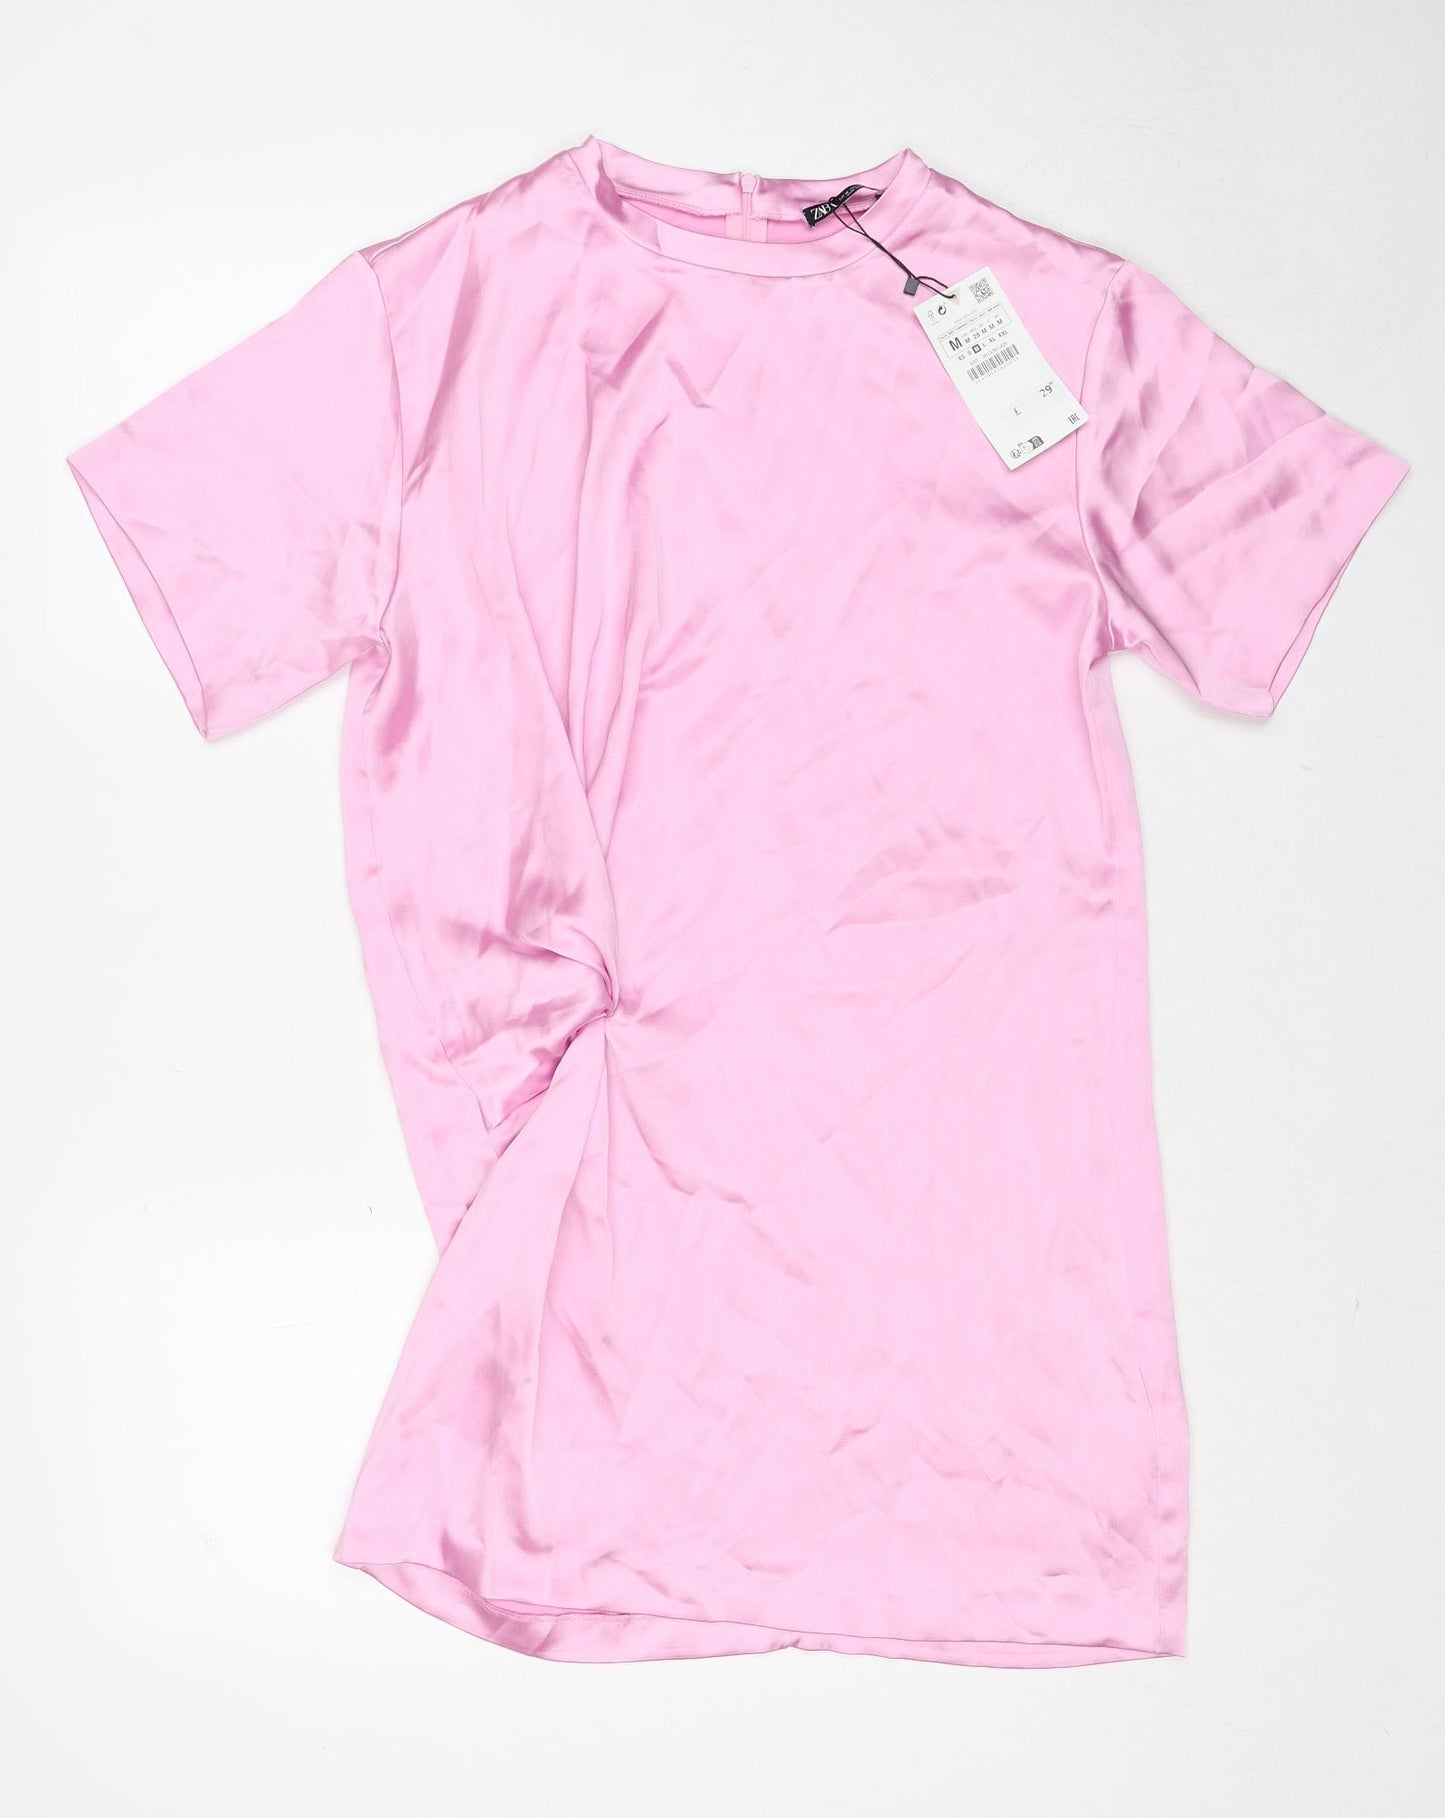 Zara Womens Pink Polyester T-Shirt Dress Size M Round Neck Zip